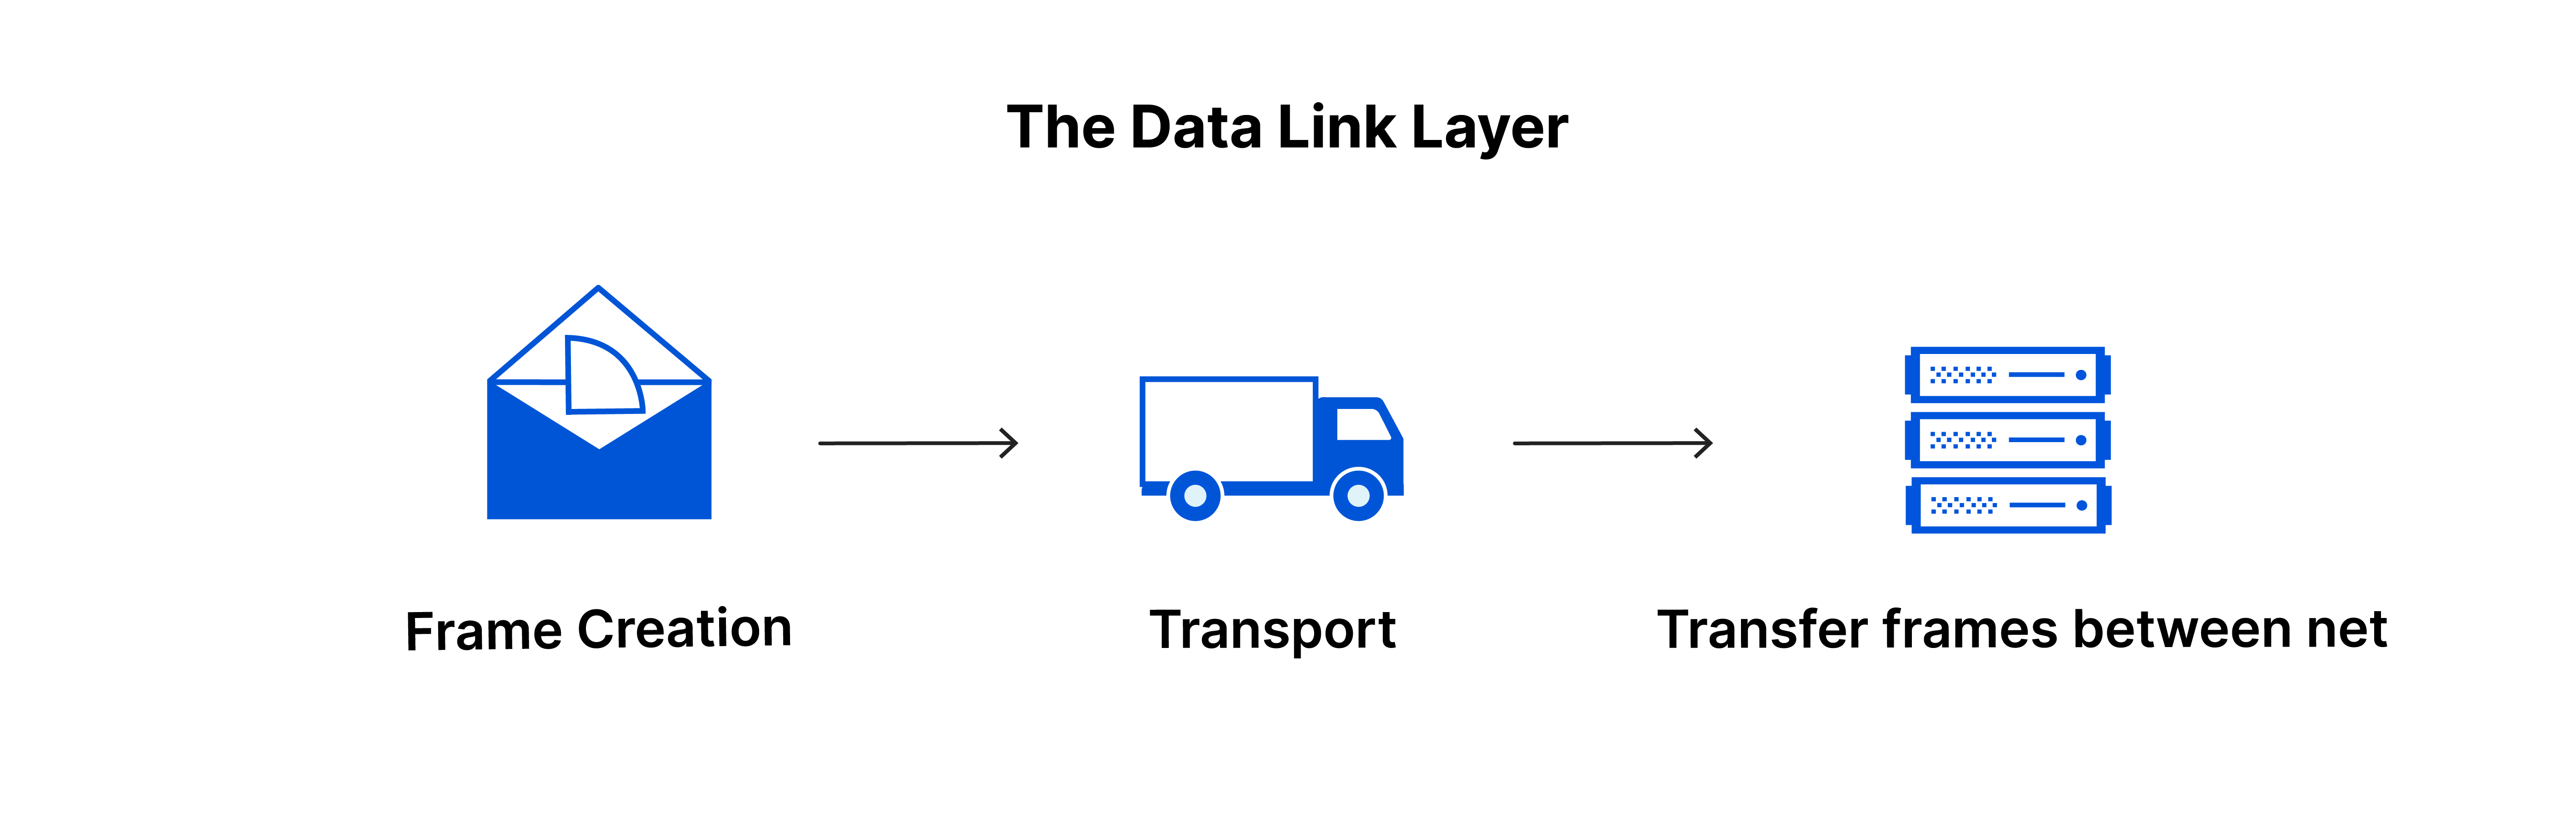 The Data Link Layer: frame creation, frames sent between networks